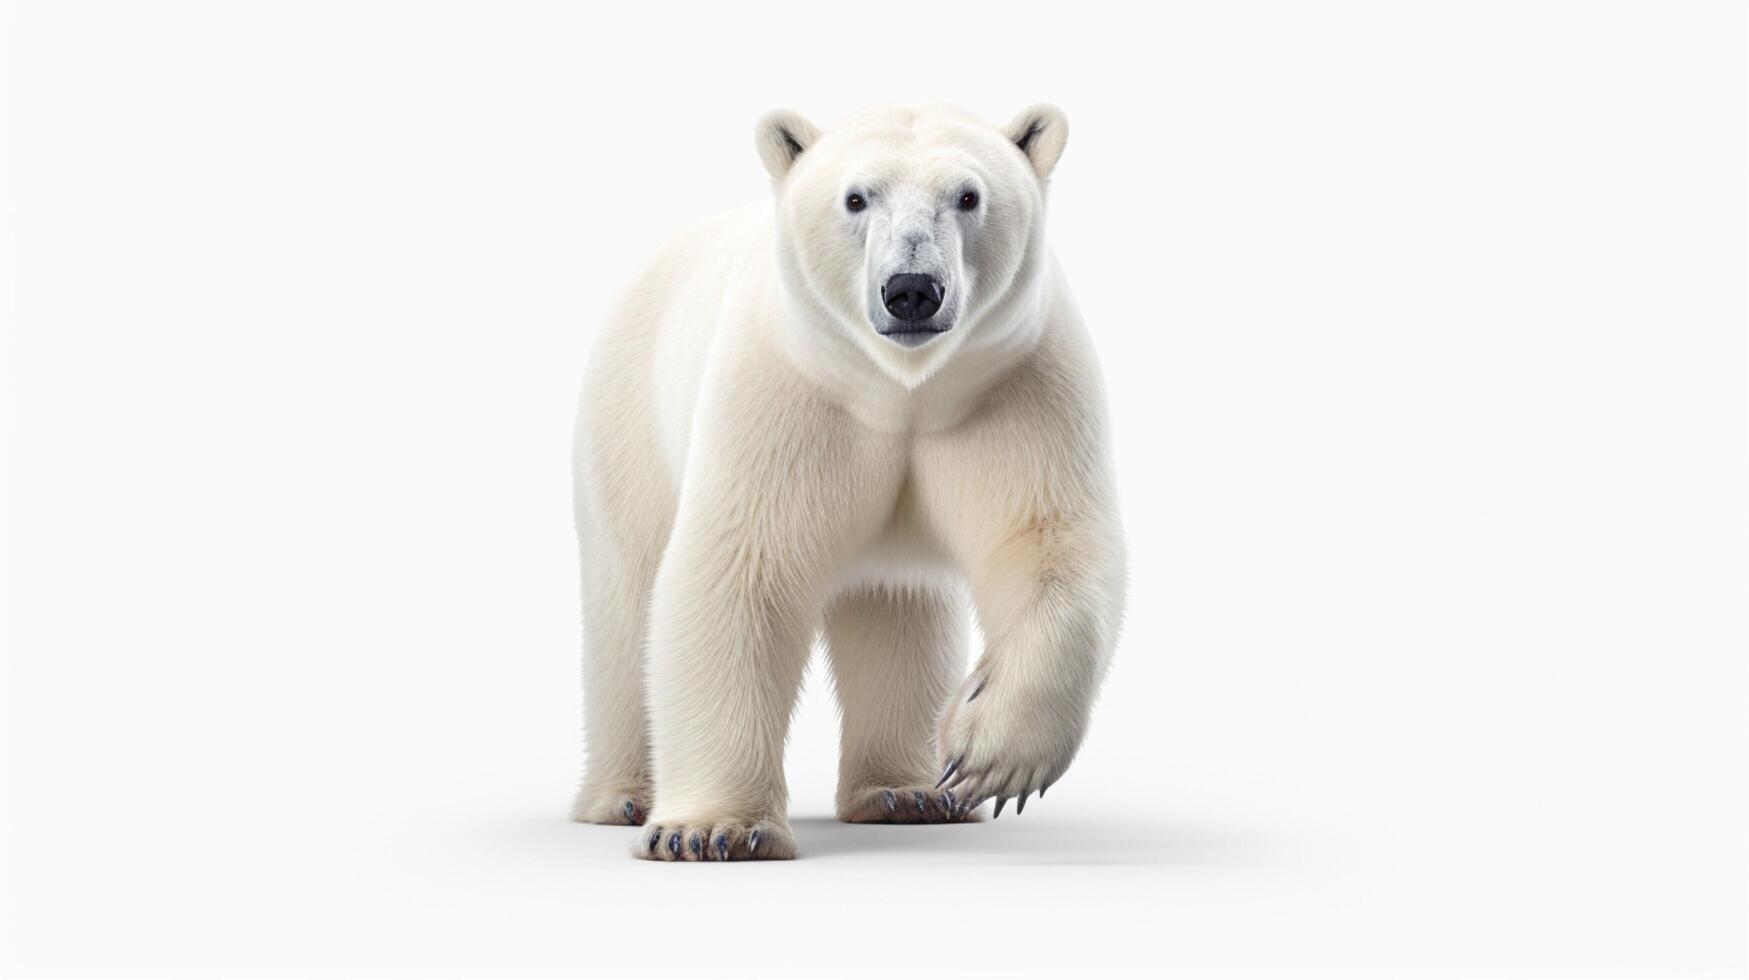 ai generado polar oso alto calidad imagen foto